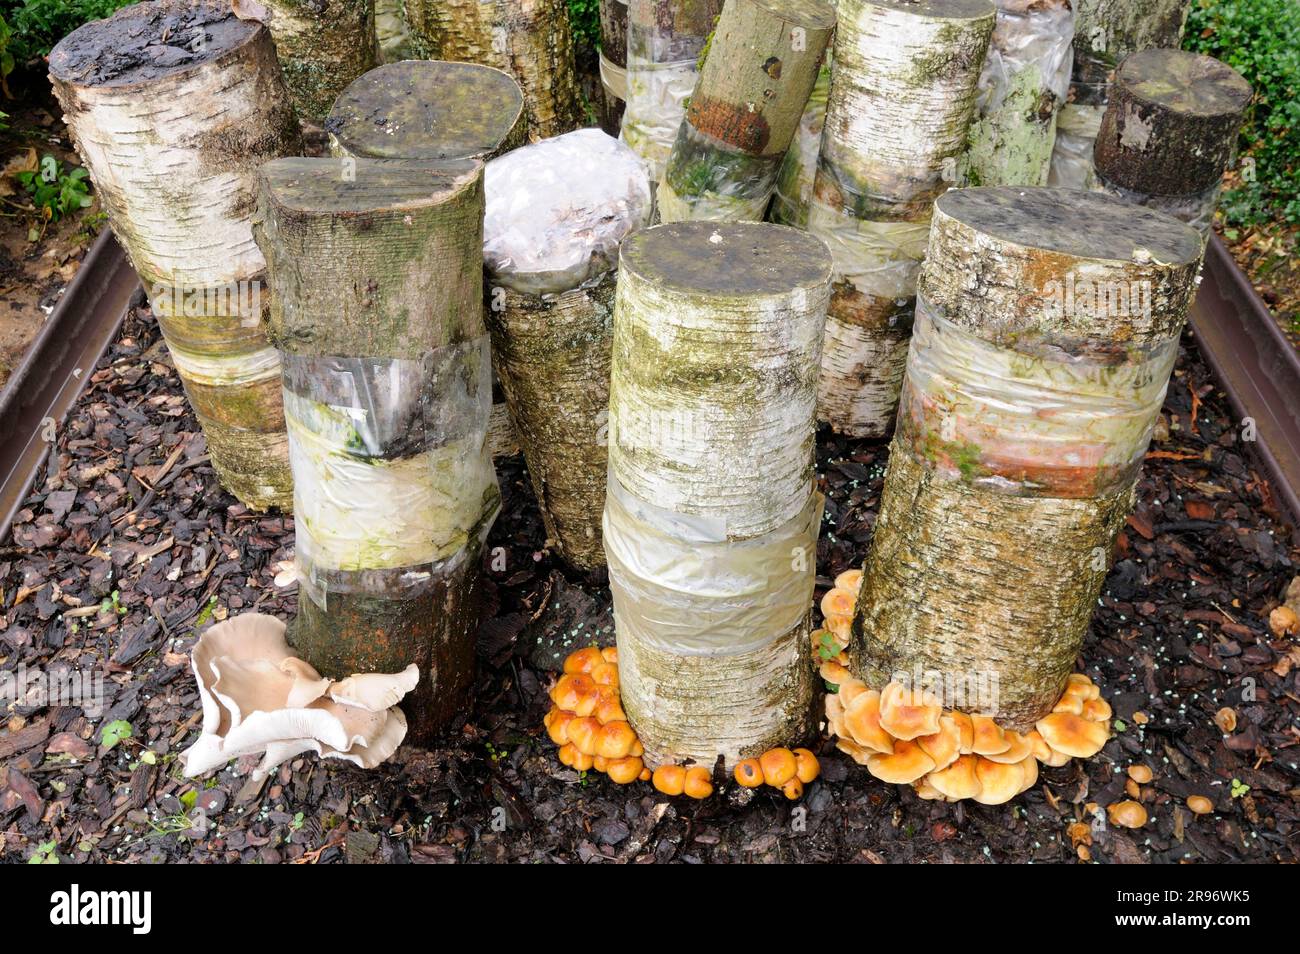 Oyster mushrooms (Pleurotus ostreatus) and Tuscan mushrooms, Oyster mushroom, Tuscan mushroom, Pholiota microspora (Pholiota nameko), Golden cap Stock Photo